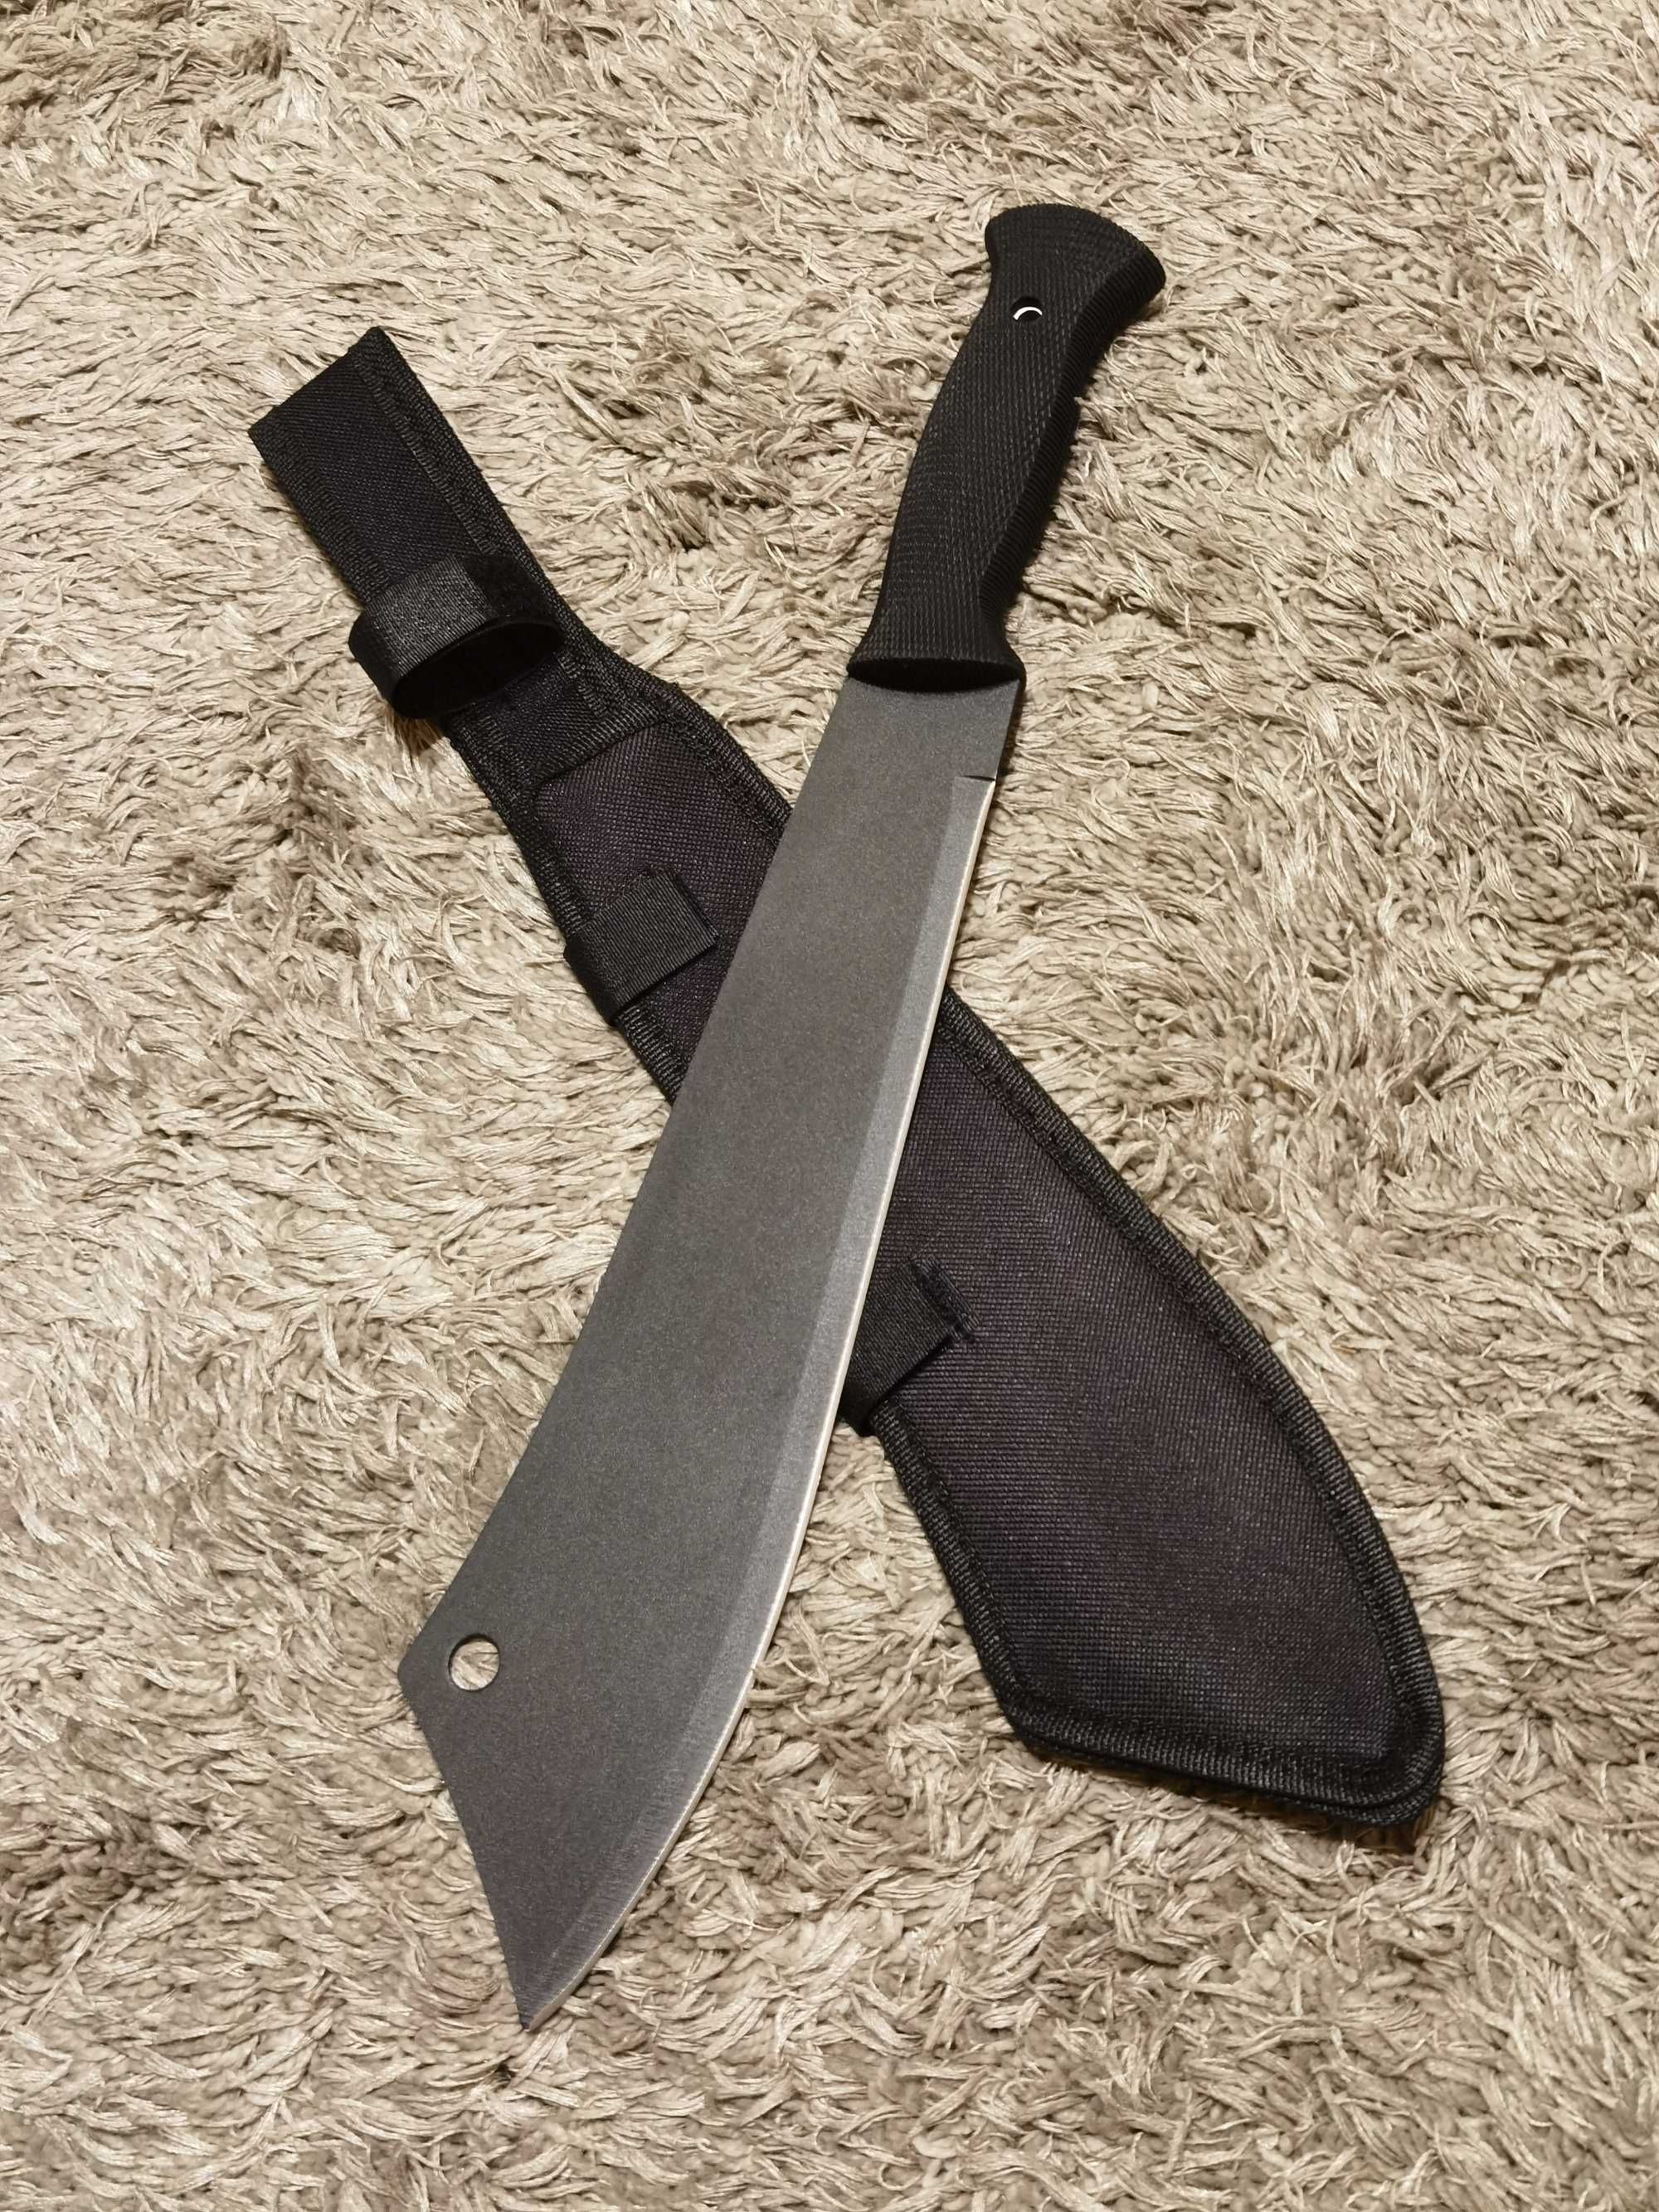 Maczeta, tasak, duży nóż /45 CM Solidna